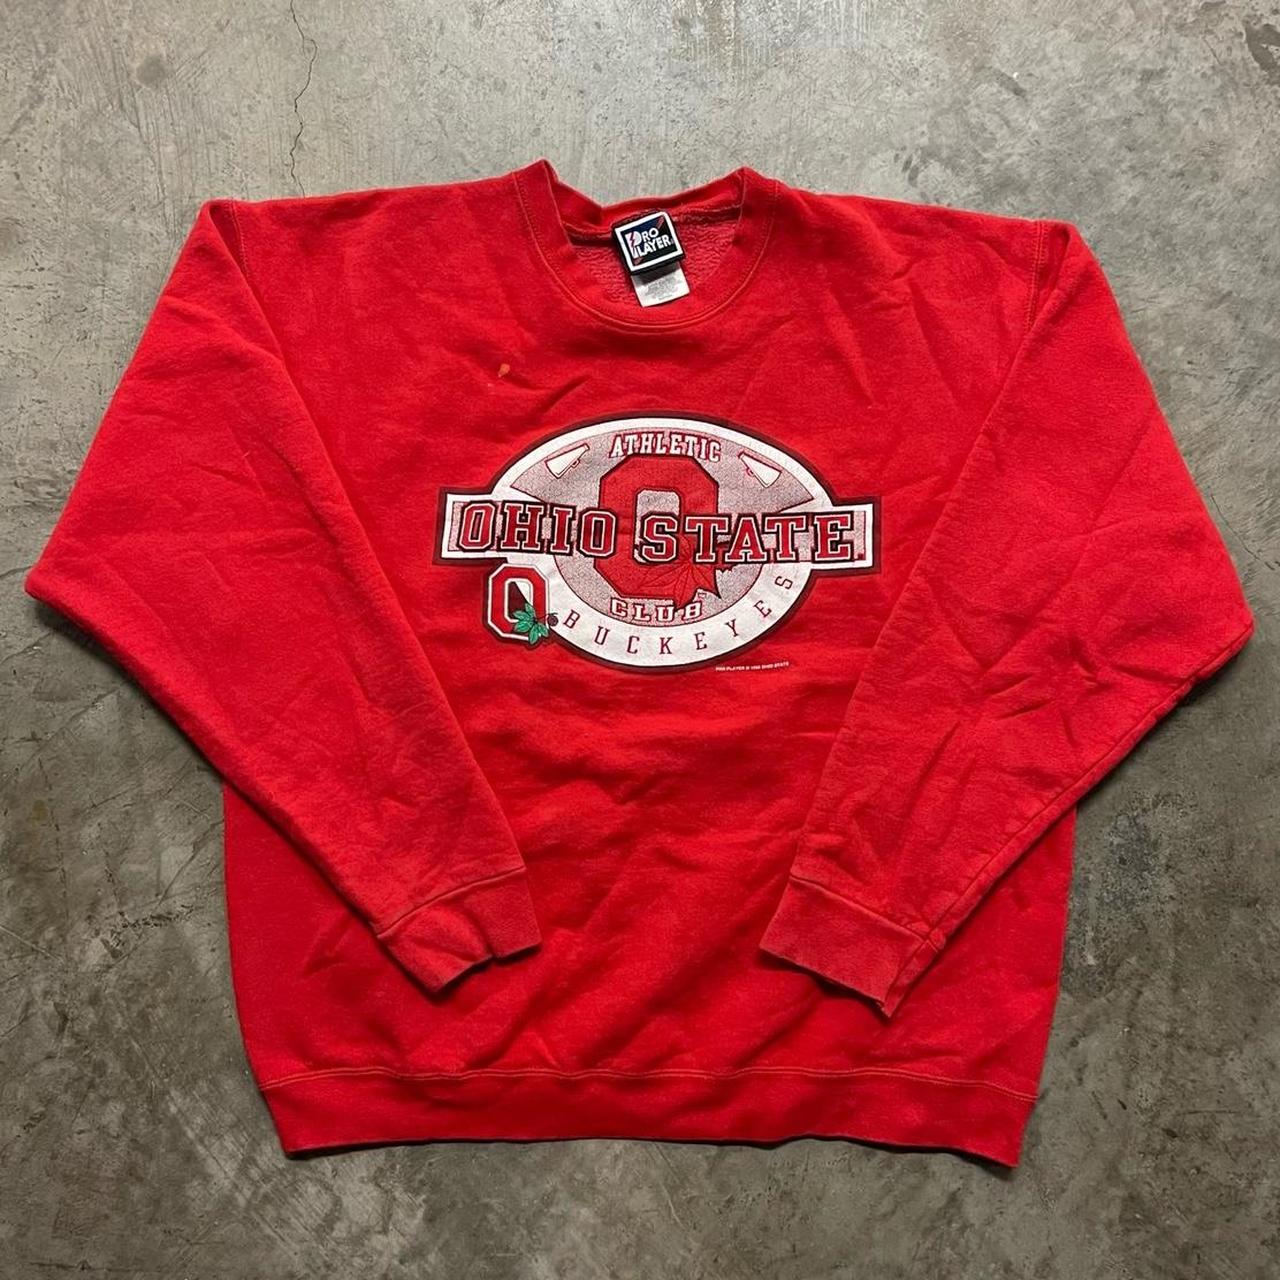 American Vintage Men's Sweatshirt - Red - S